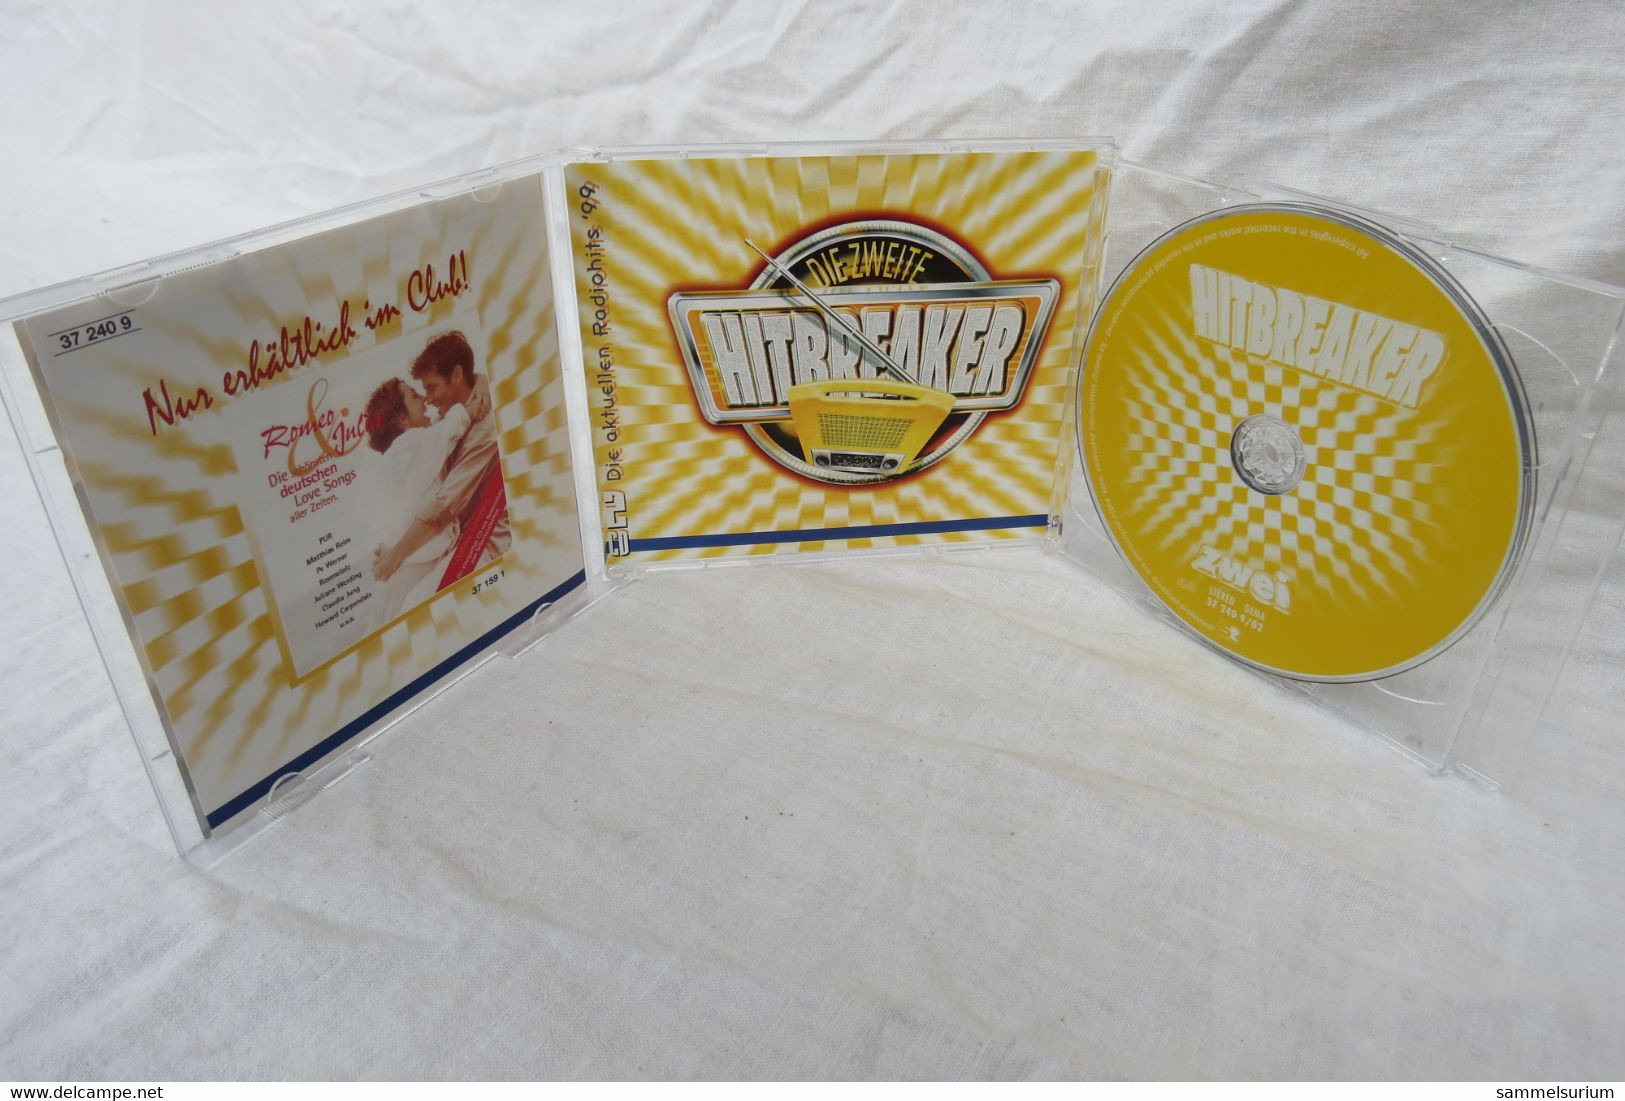 2 CDs "Die Zweite Hitbreaker" Die Aktuellen Radiohits '99 - Compilations